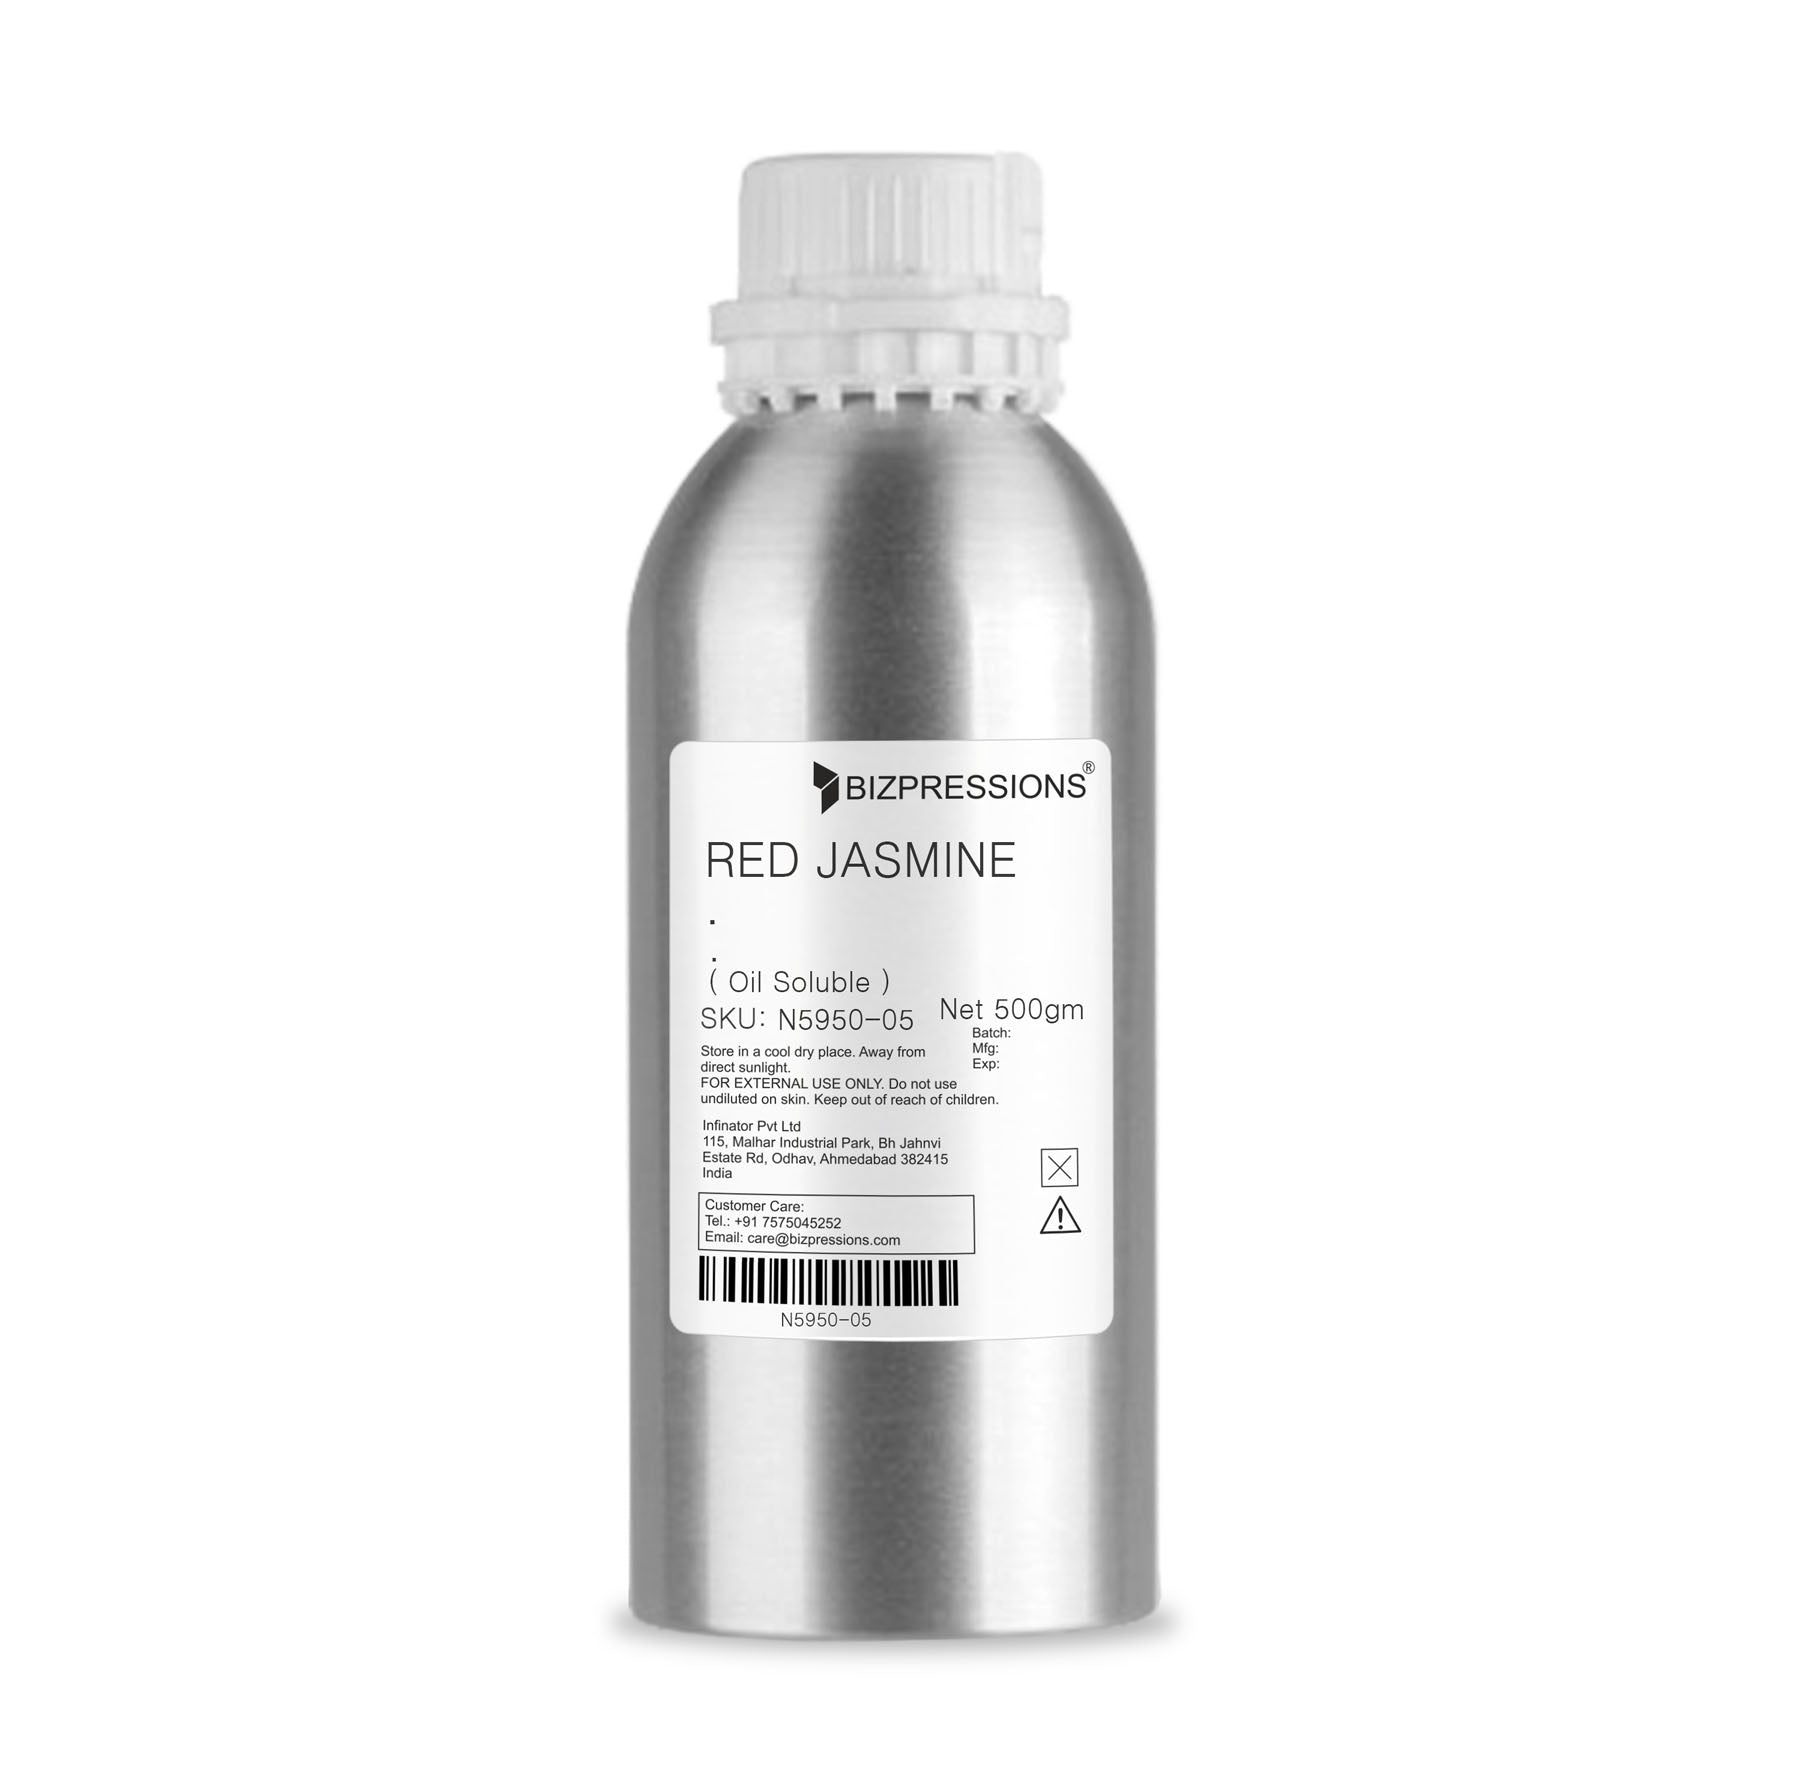 RED JASMINE - Fragrance ( Oil Soluble ) - 500 gm